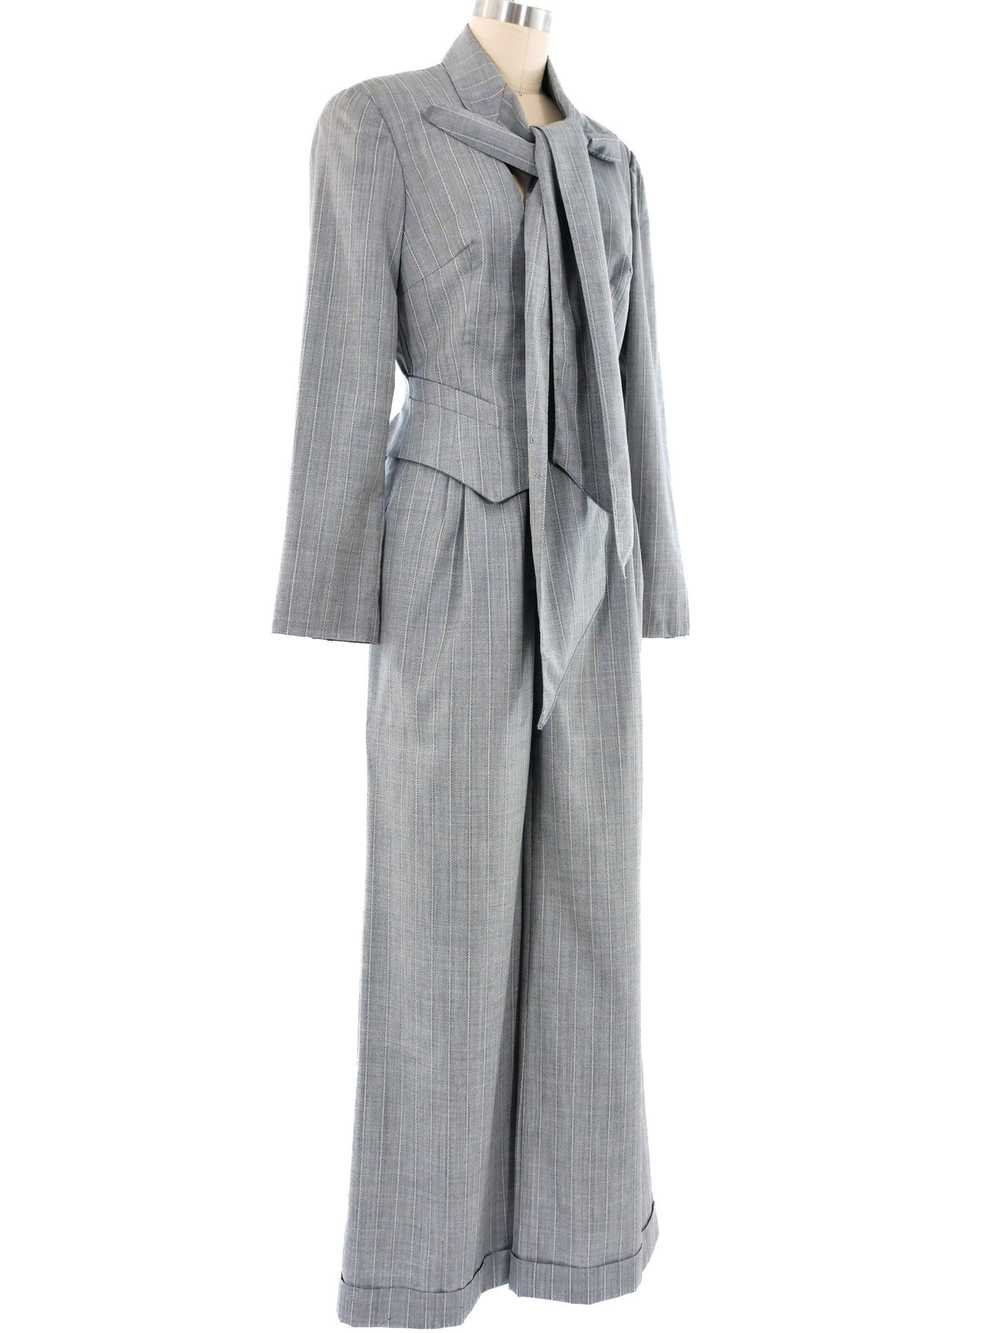 2005 Alexander McQueen Pinstripe Pant Suit - Gem